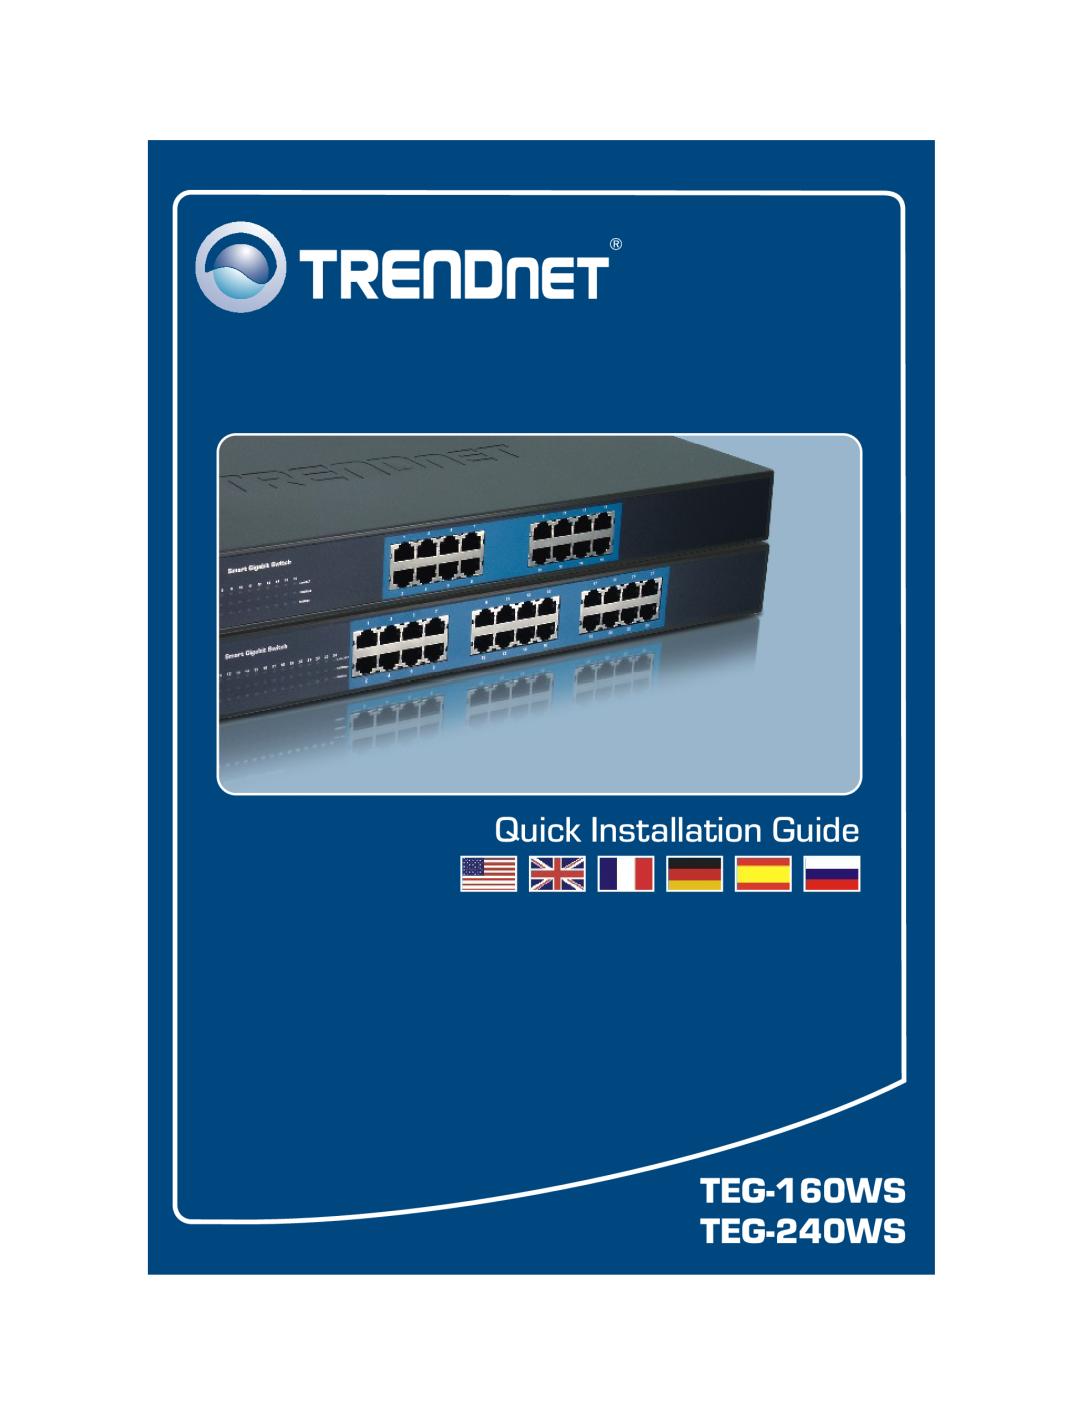 TRENDnet manual Quick Installation Guide, TEG-160WS TEG-240WS 